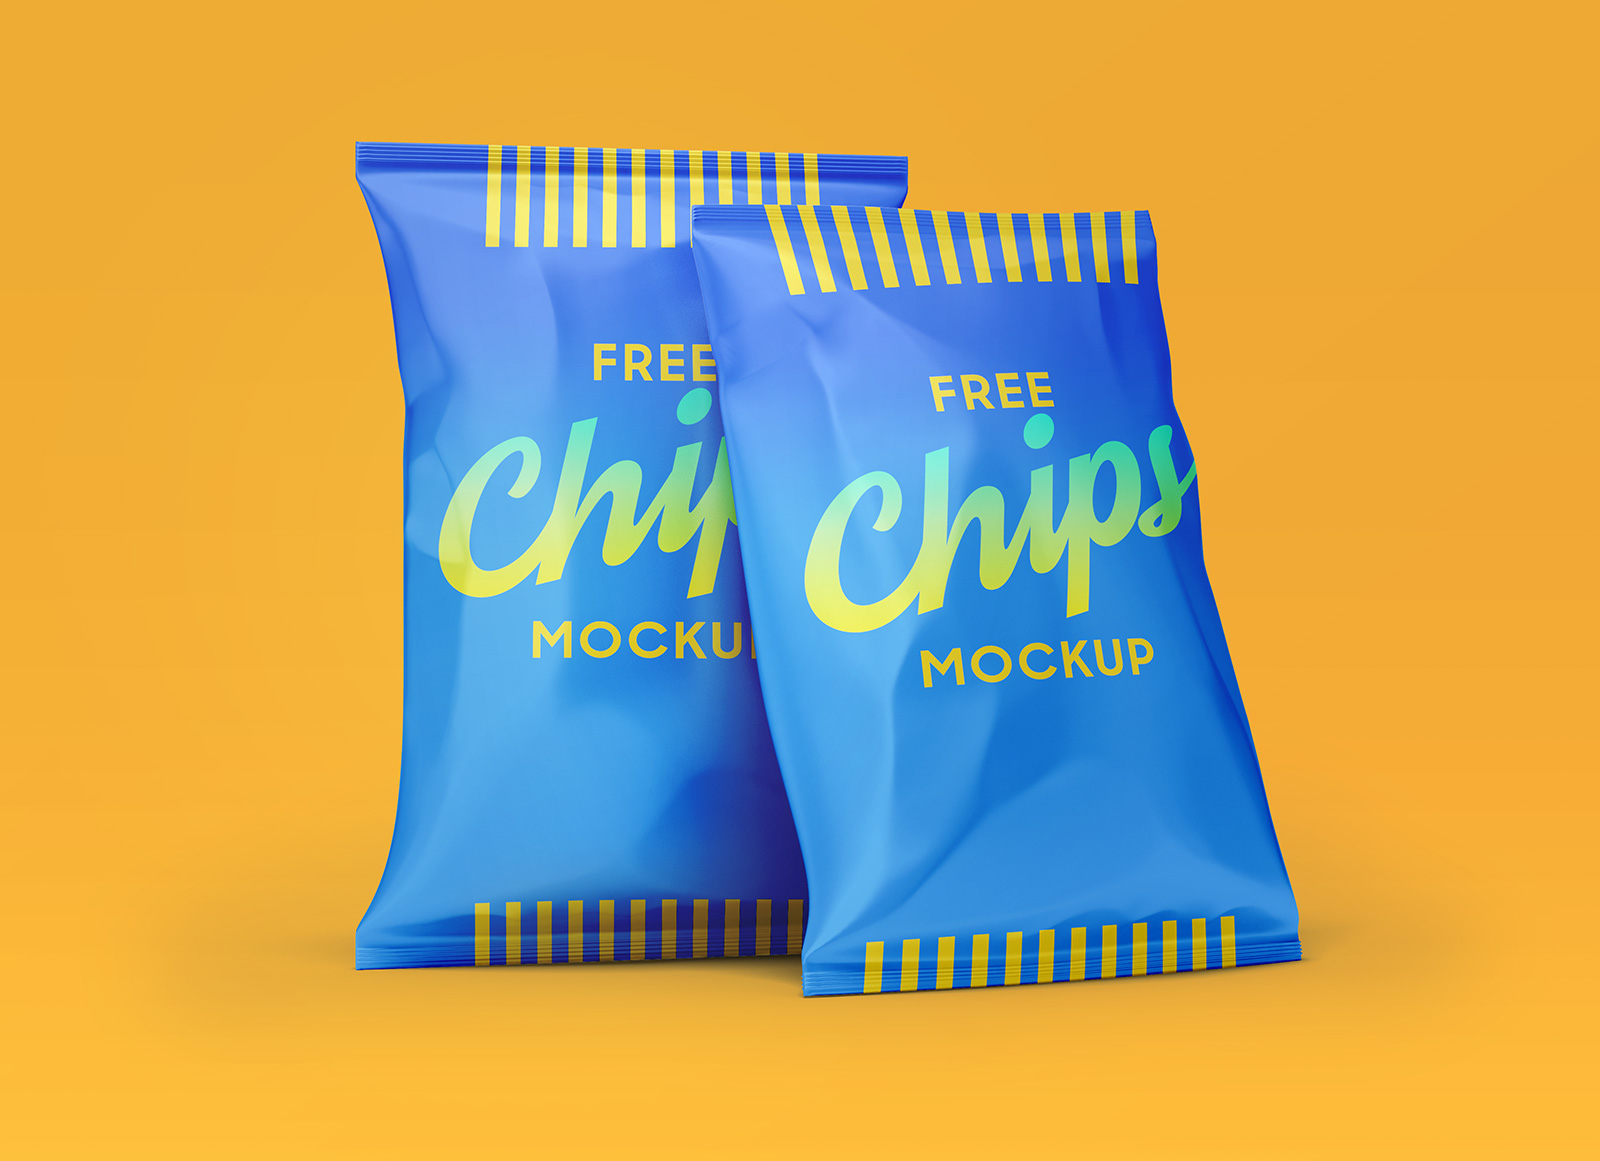 Free-Chips-Packaging-Mockup-PSD-Set